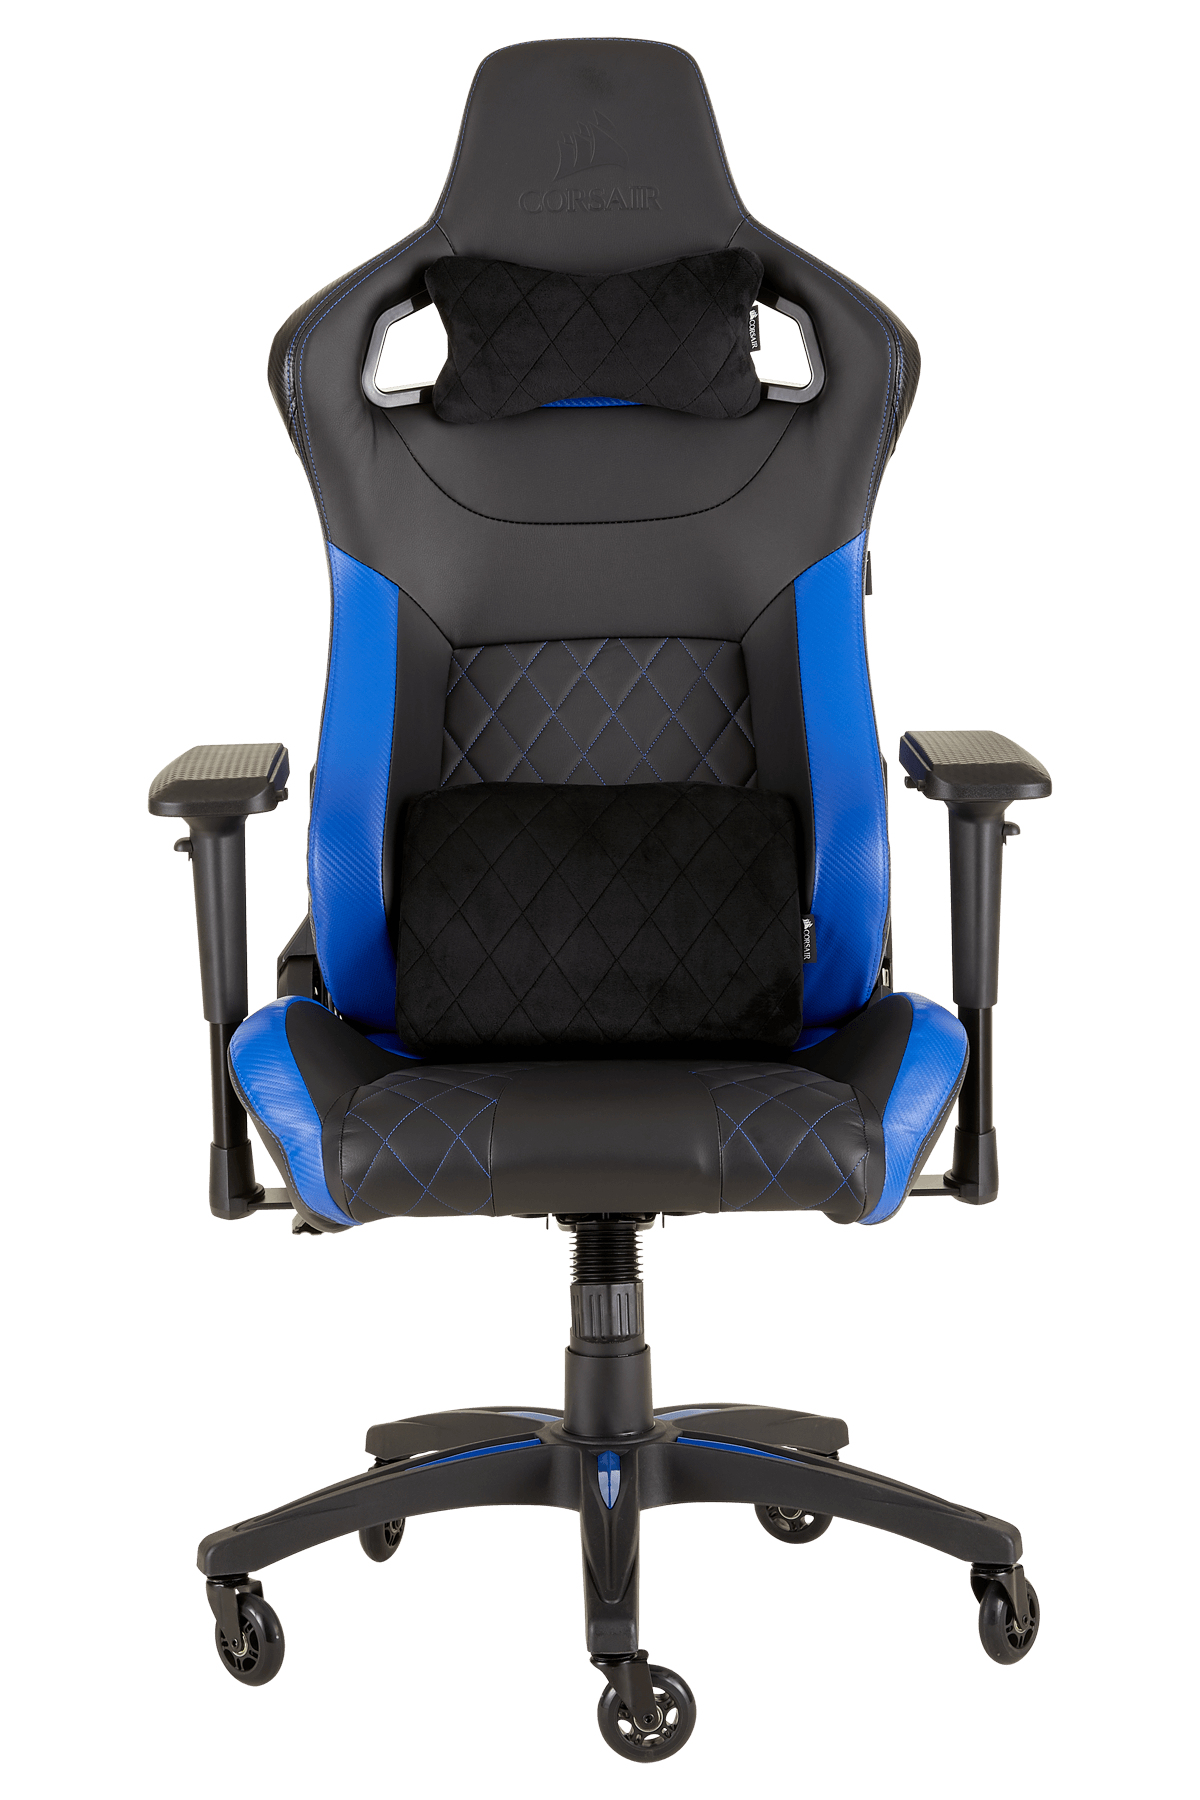 CORSAIR CF-9010014-WW T1 RACE 2018 CHAIR Schwarz/Blau BLACK/BLUE Gaming Stuhl